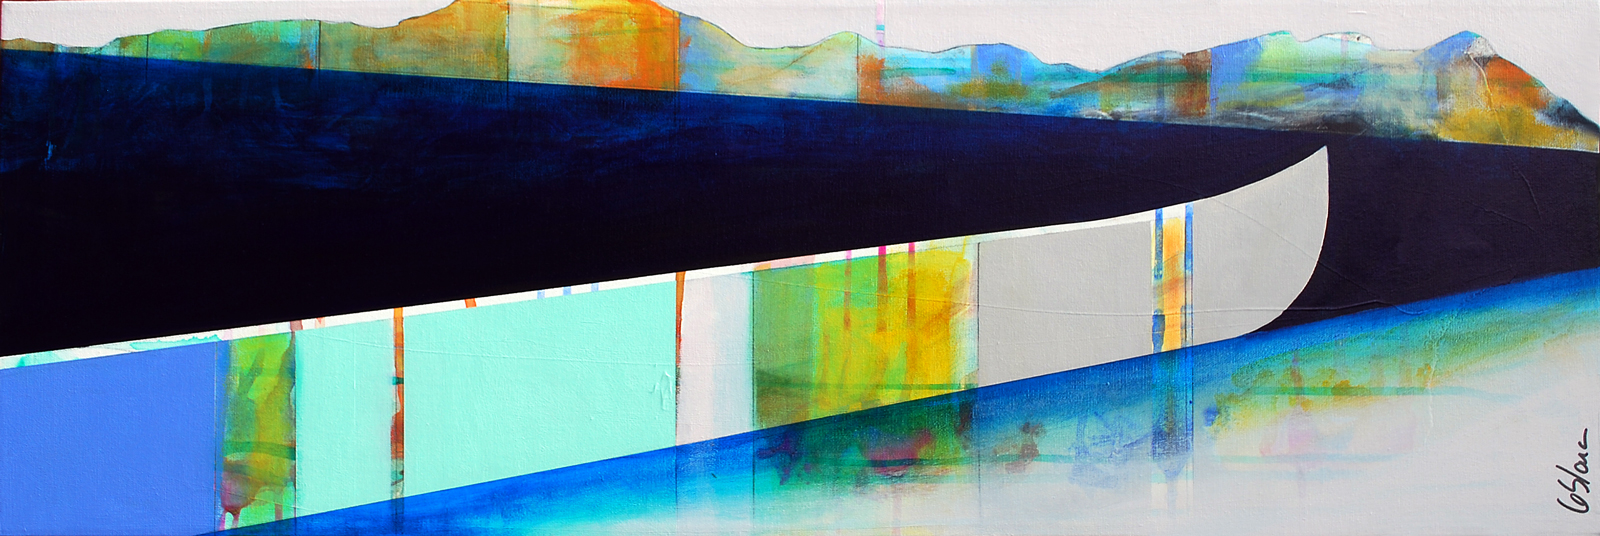 Éphèmère, mixed media canoe painting by Sylvain Leblanc | Effusion Art Gallery + Cast Glass Studio, Invermere BC